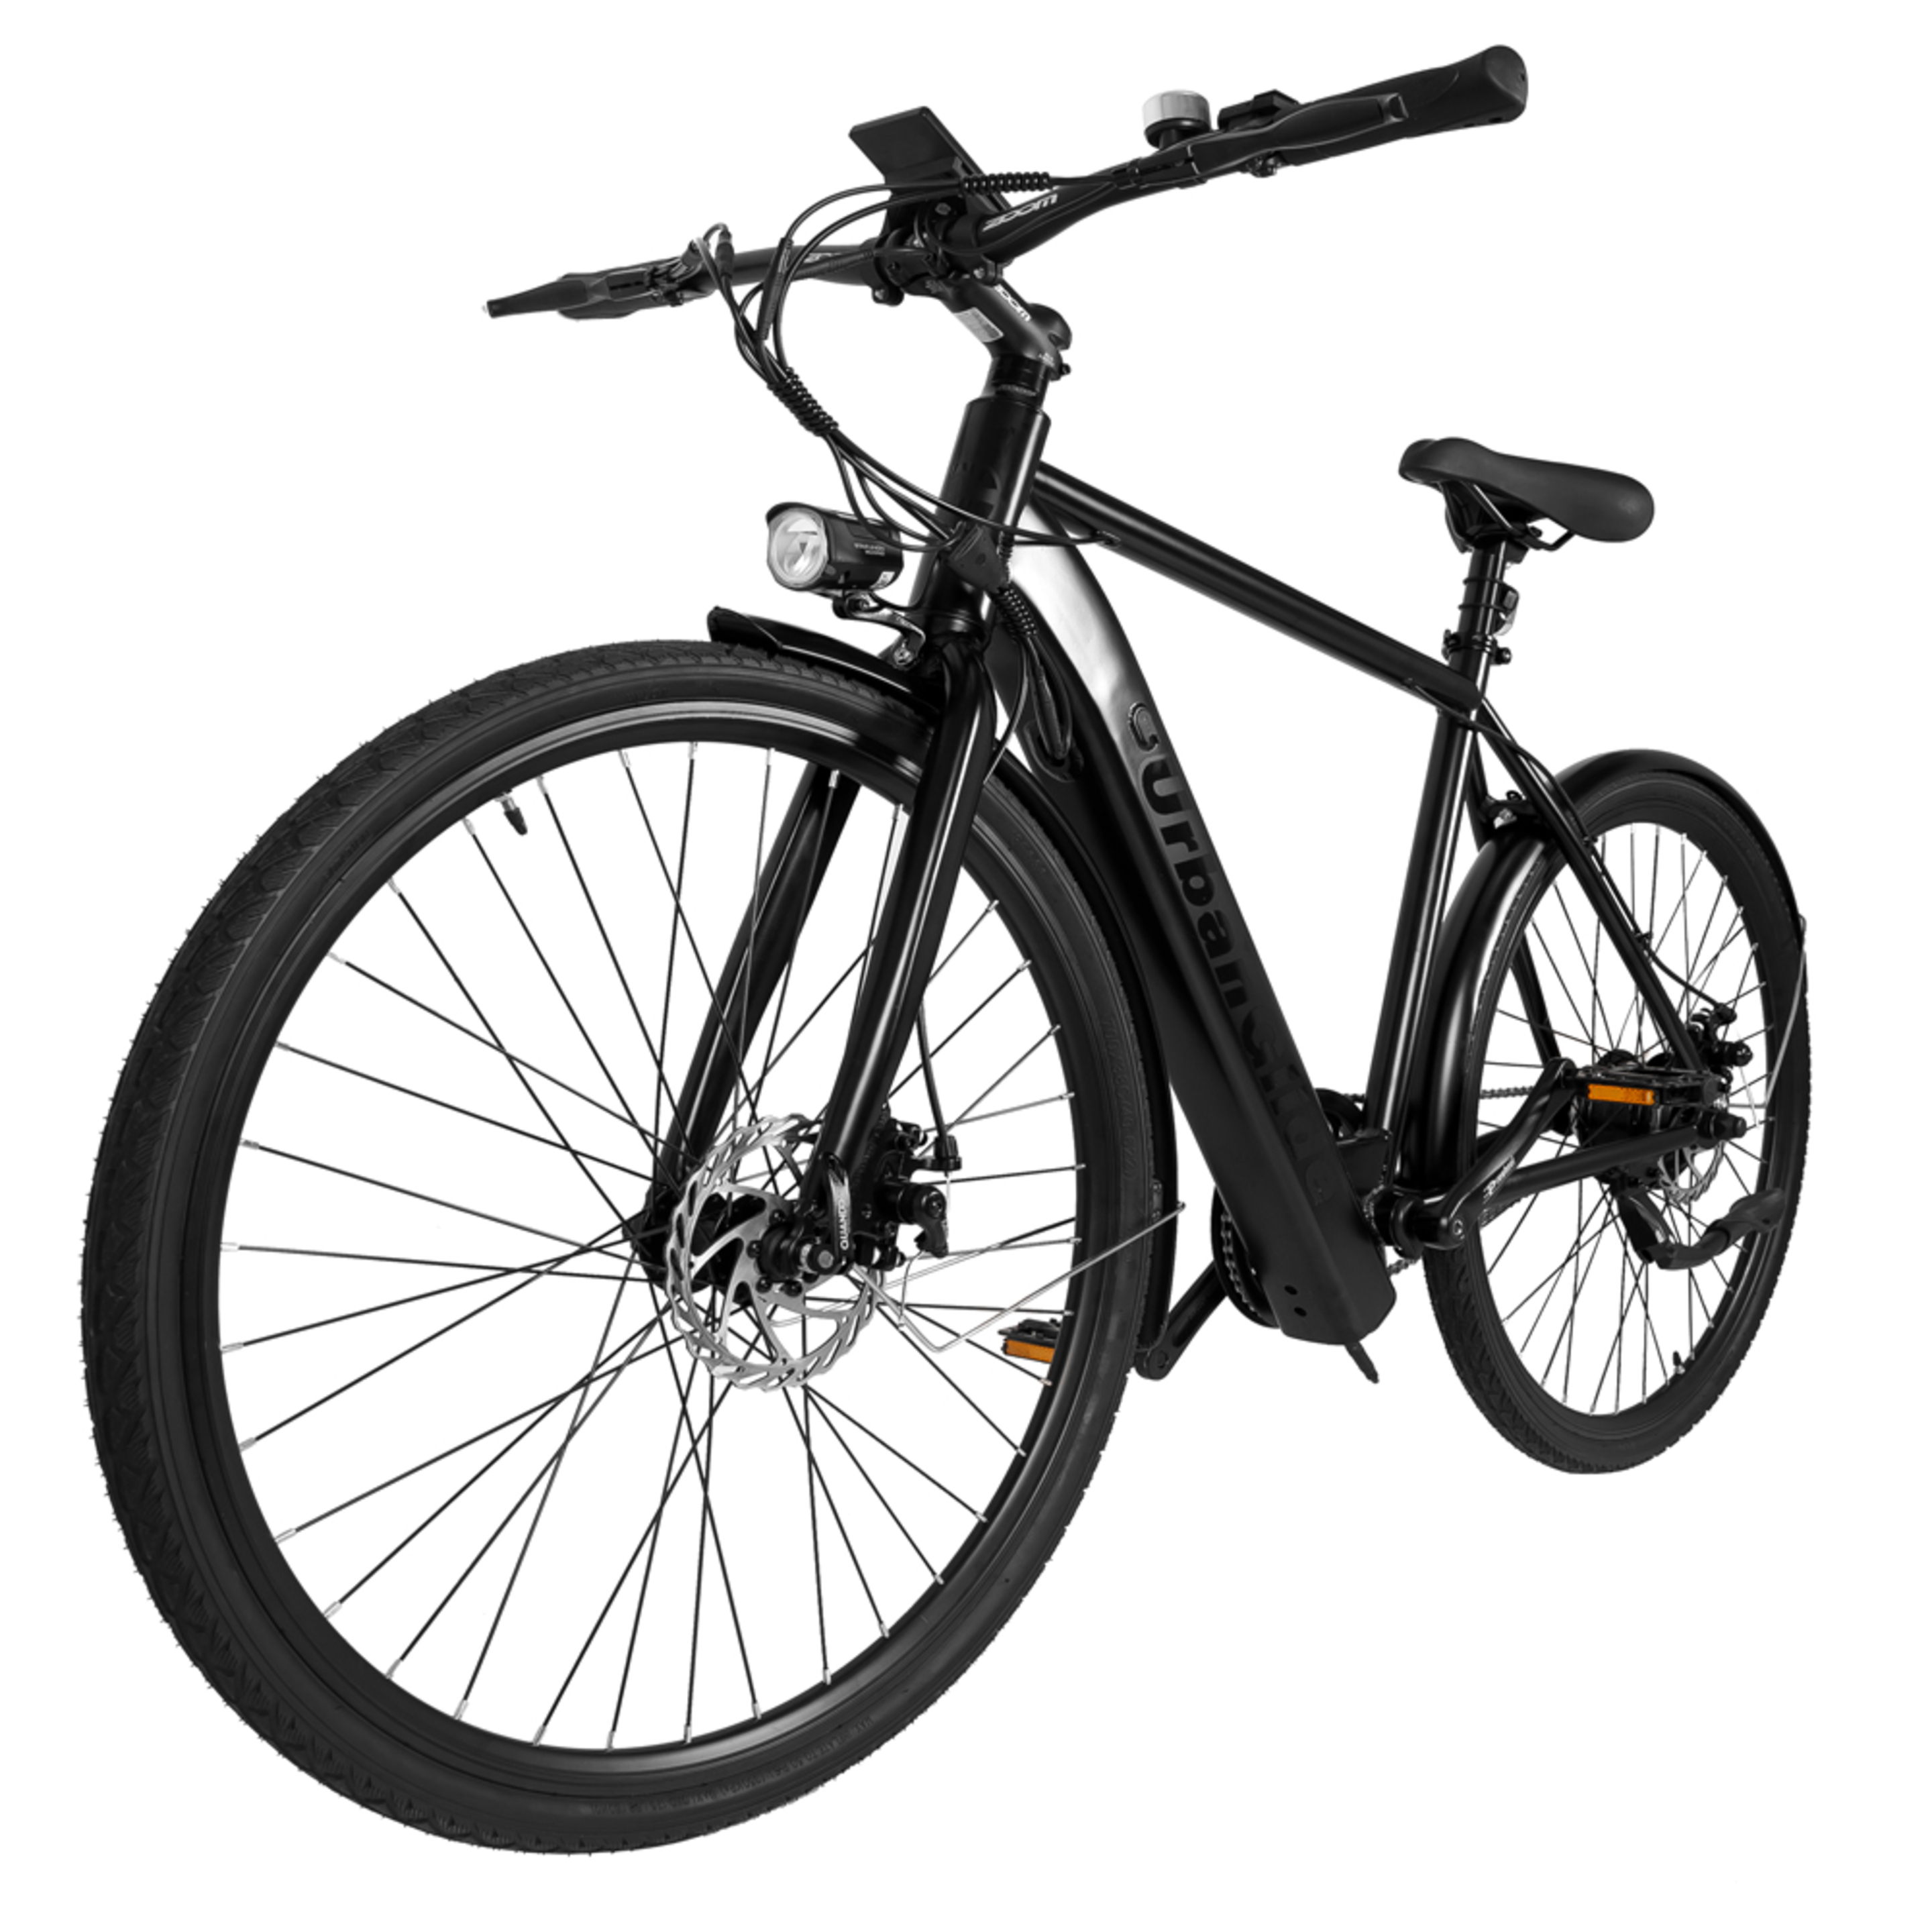 Bicicleta Eléctrica Urbanglide M7 250w - 25km/h - Autonomía 70 Km*